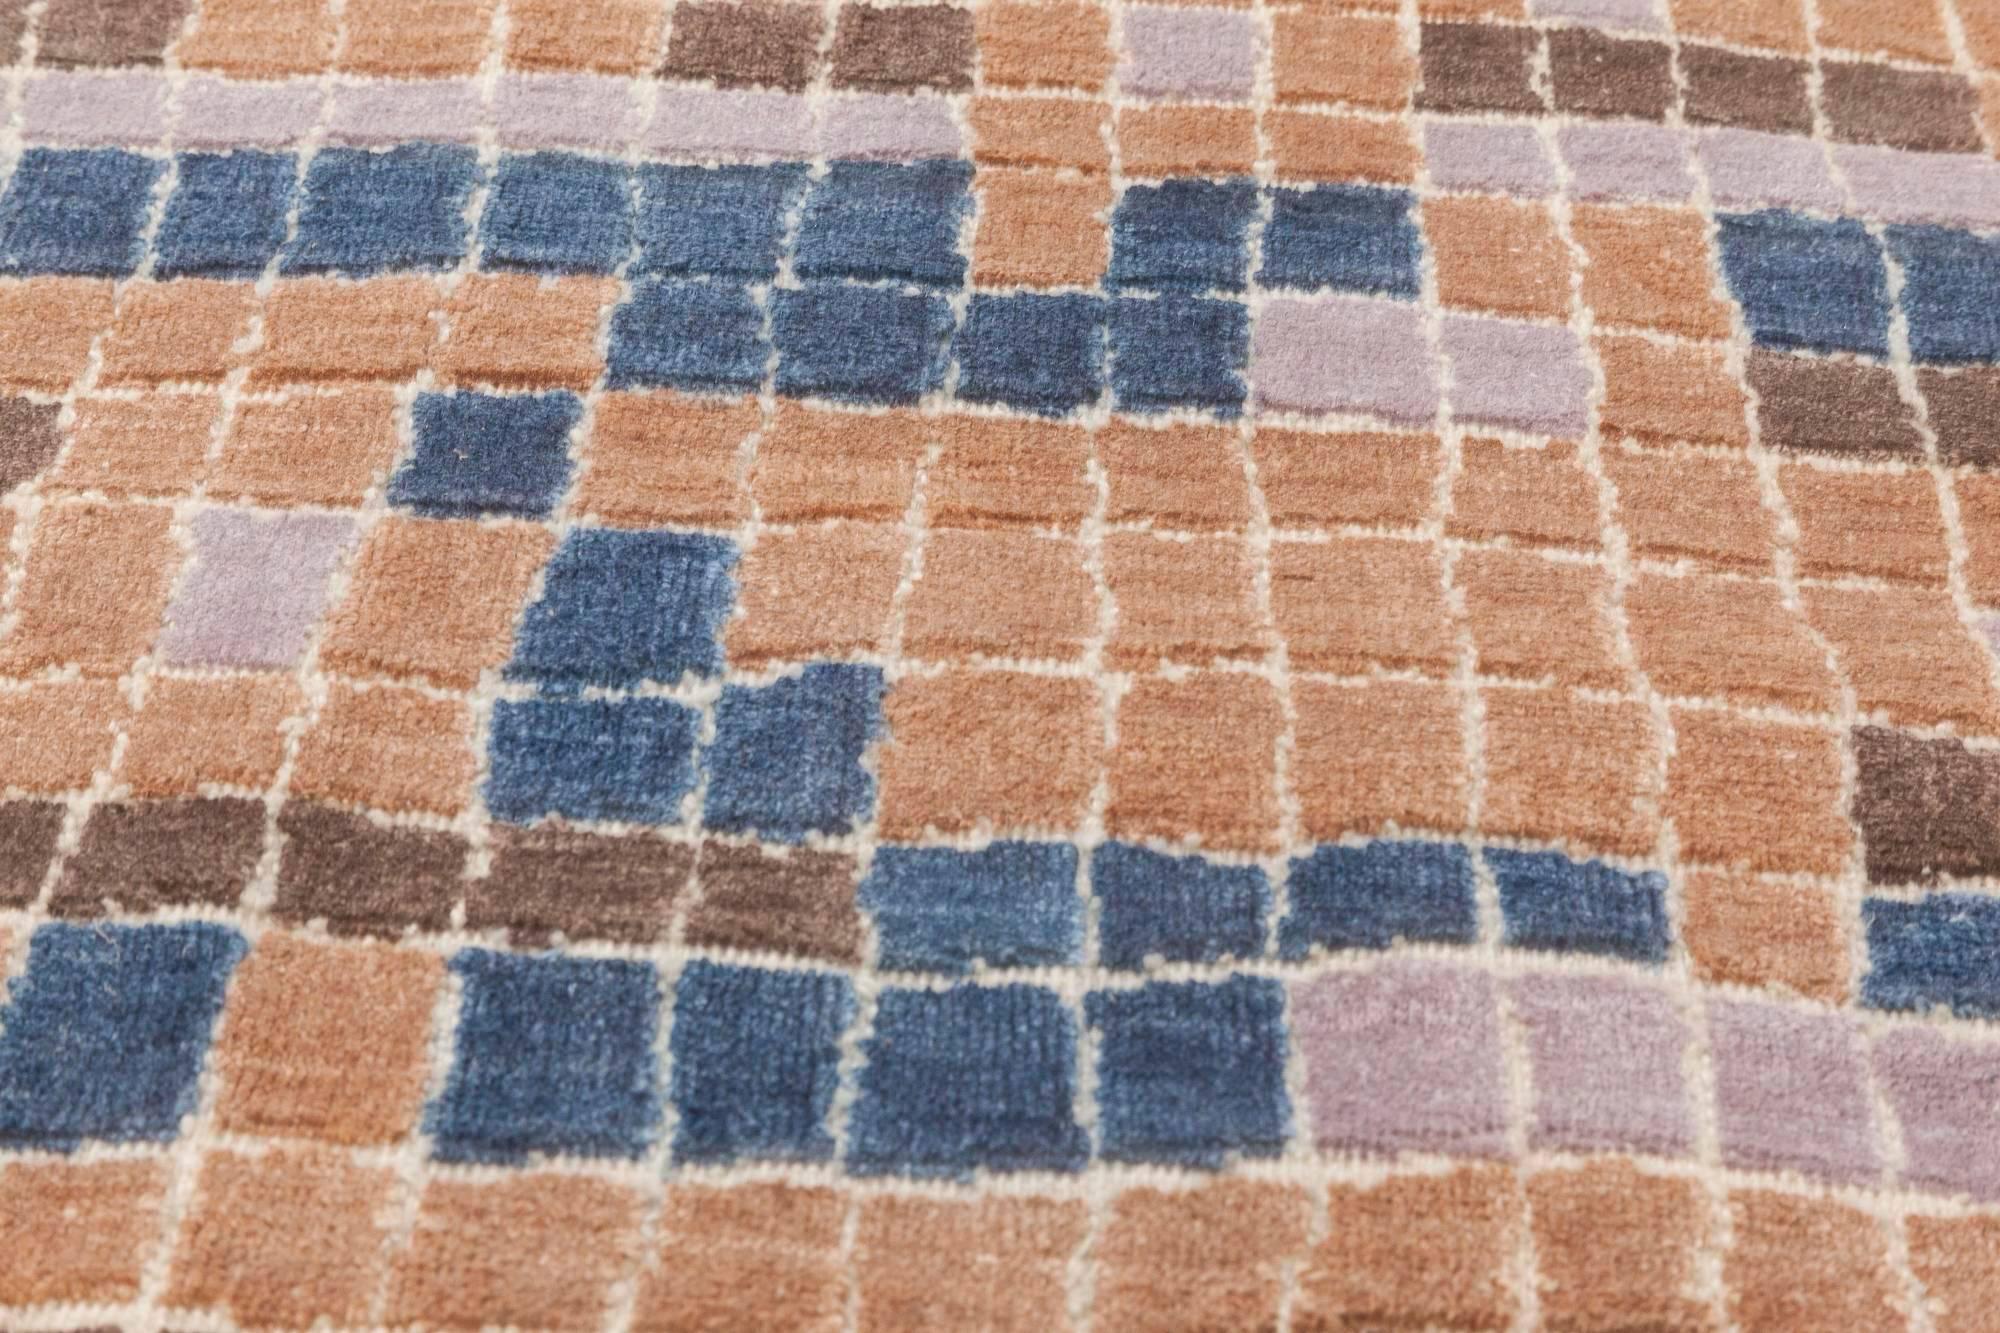 Modern multi-color pool tile geometric design rug by Doris Leslie Blau
Size: 12'0